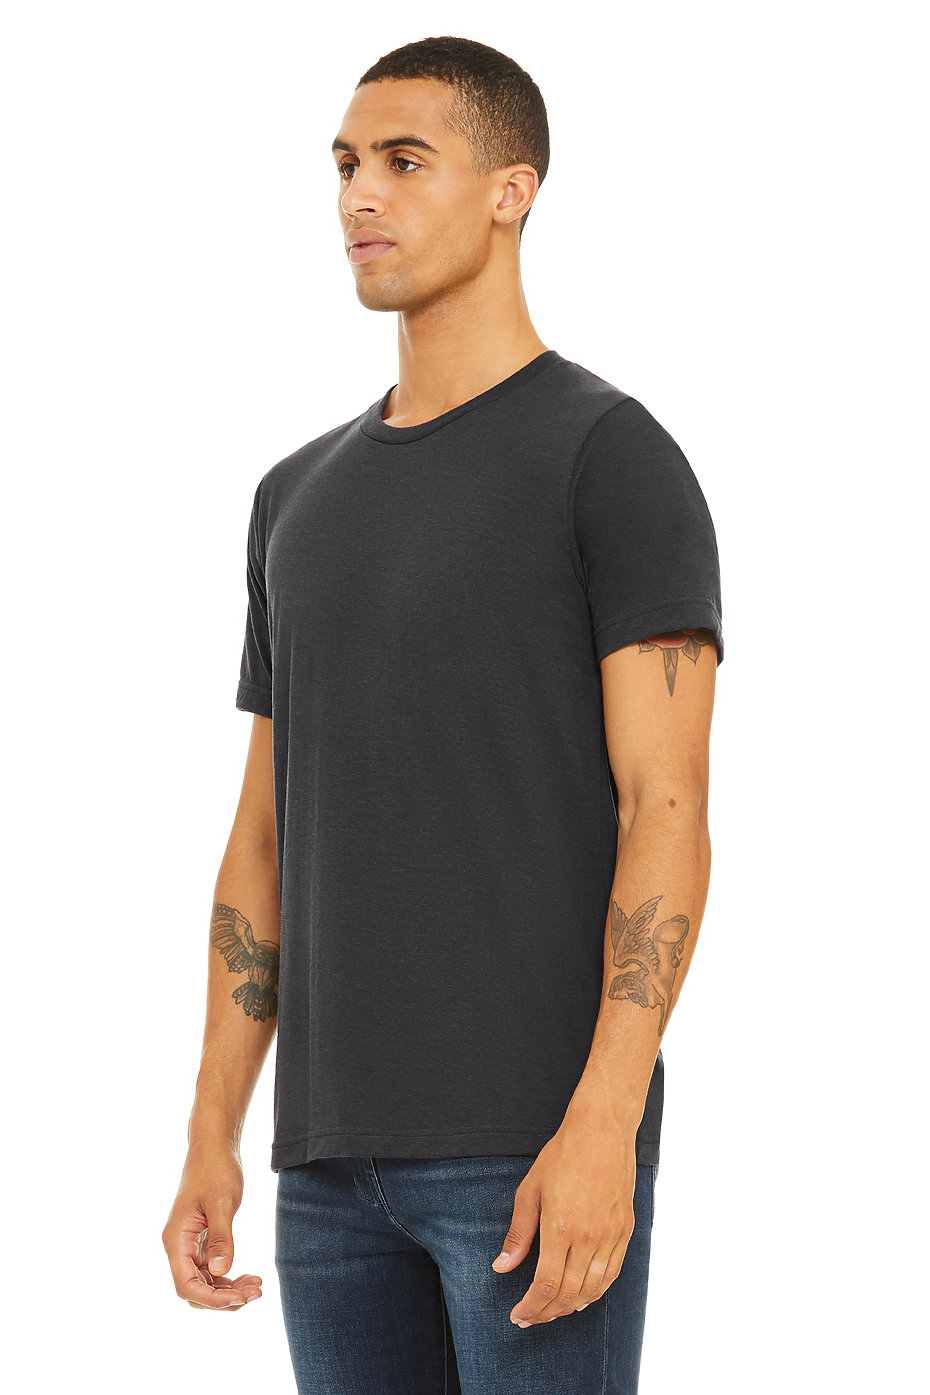 Tri Blend T Shirts | Unisex Tri Blend Shirt | Mens Wholesale Clothing ...